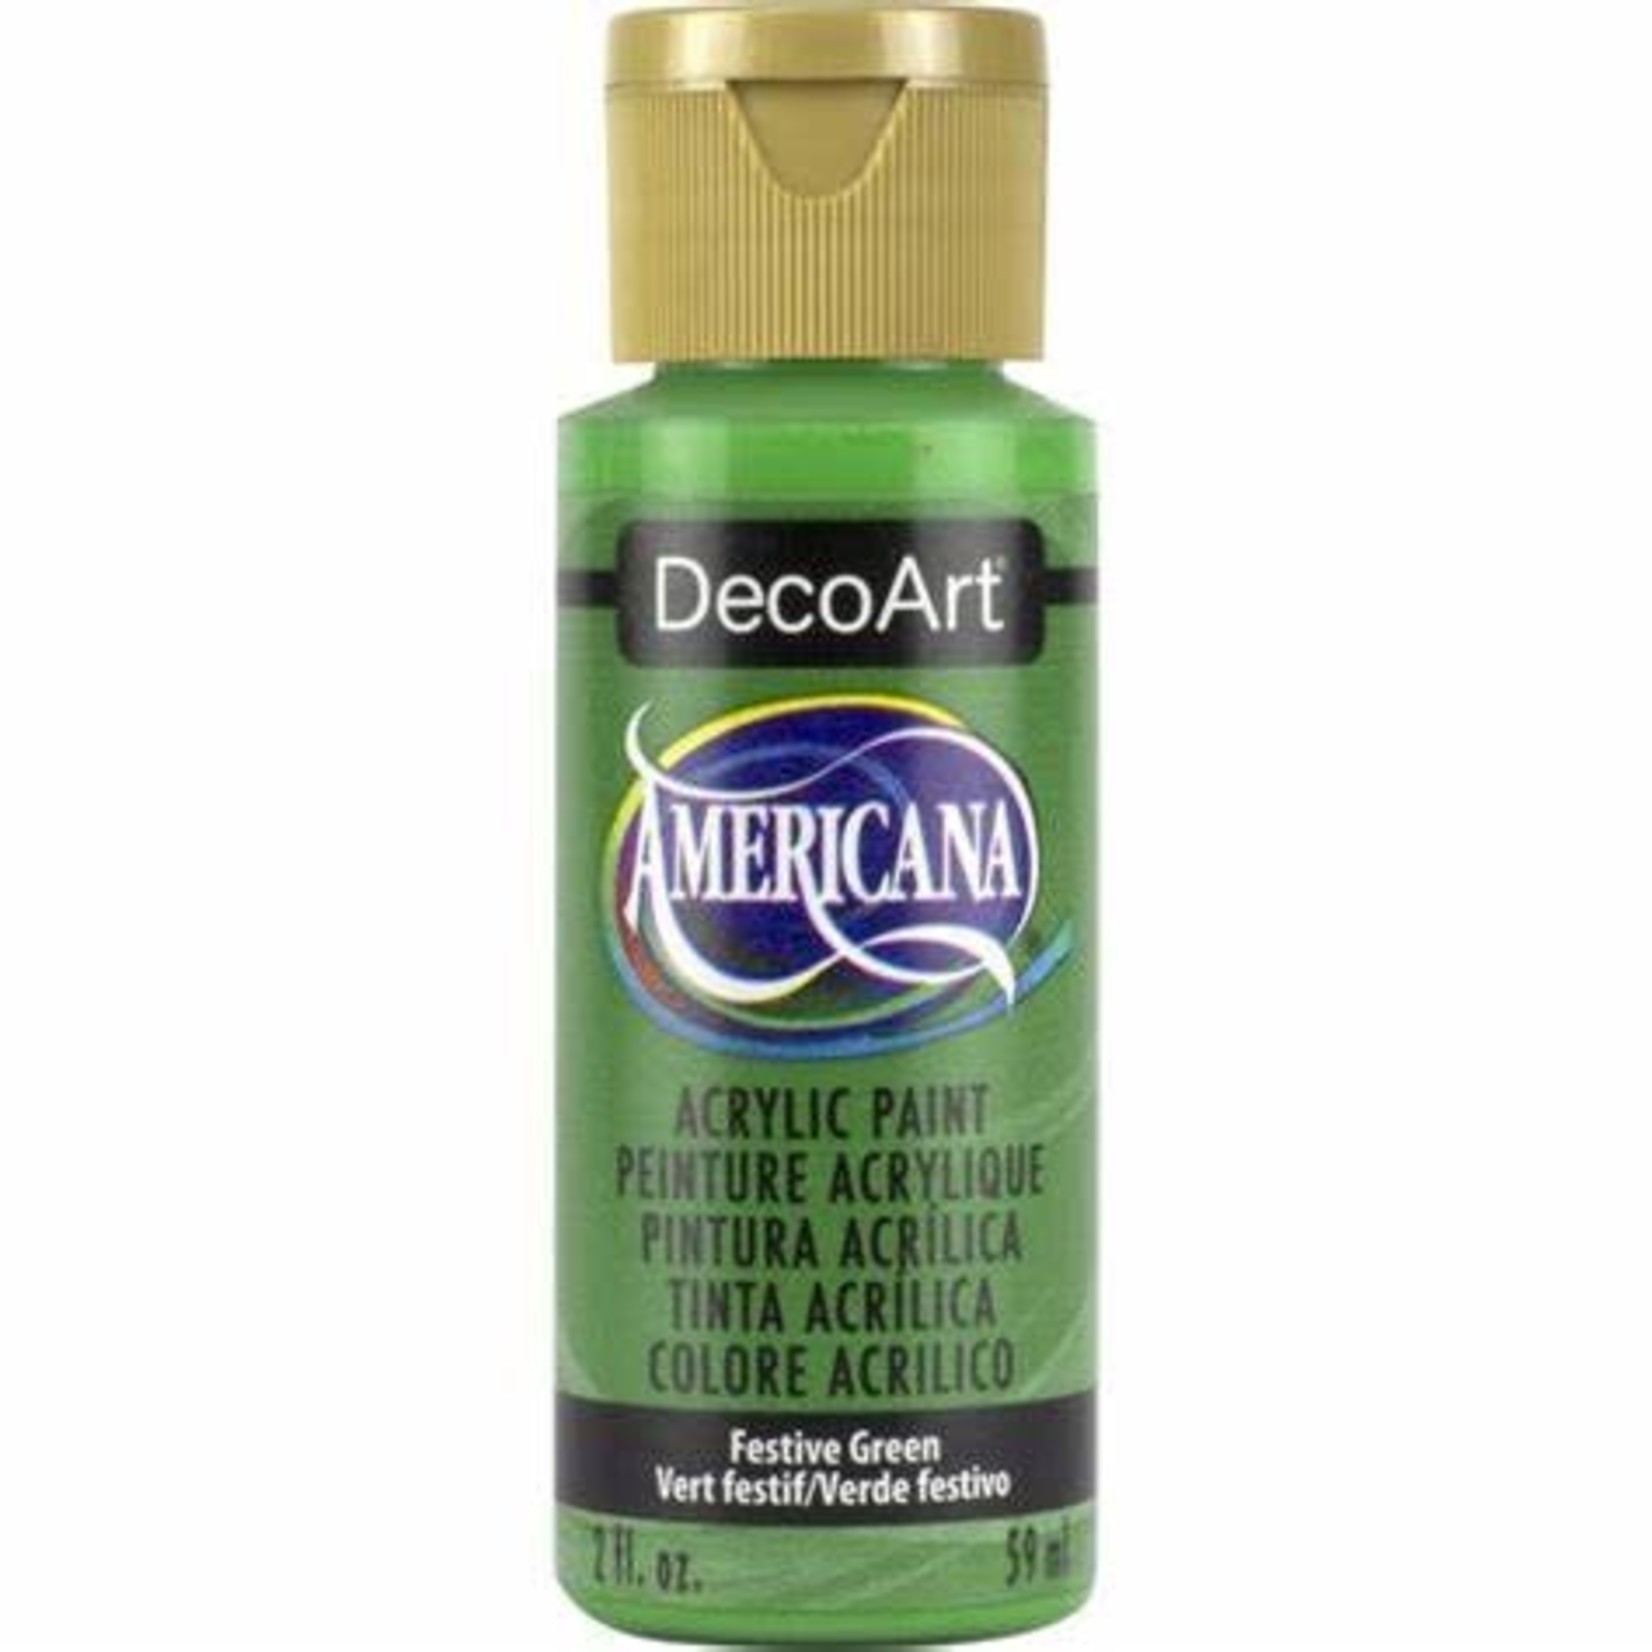 DecoArt Americana - Acrylic Paint - Festive Green